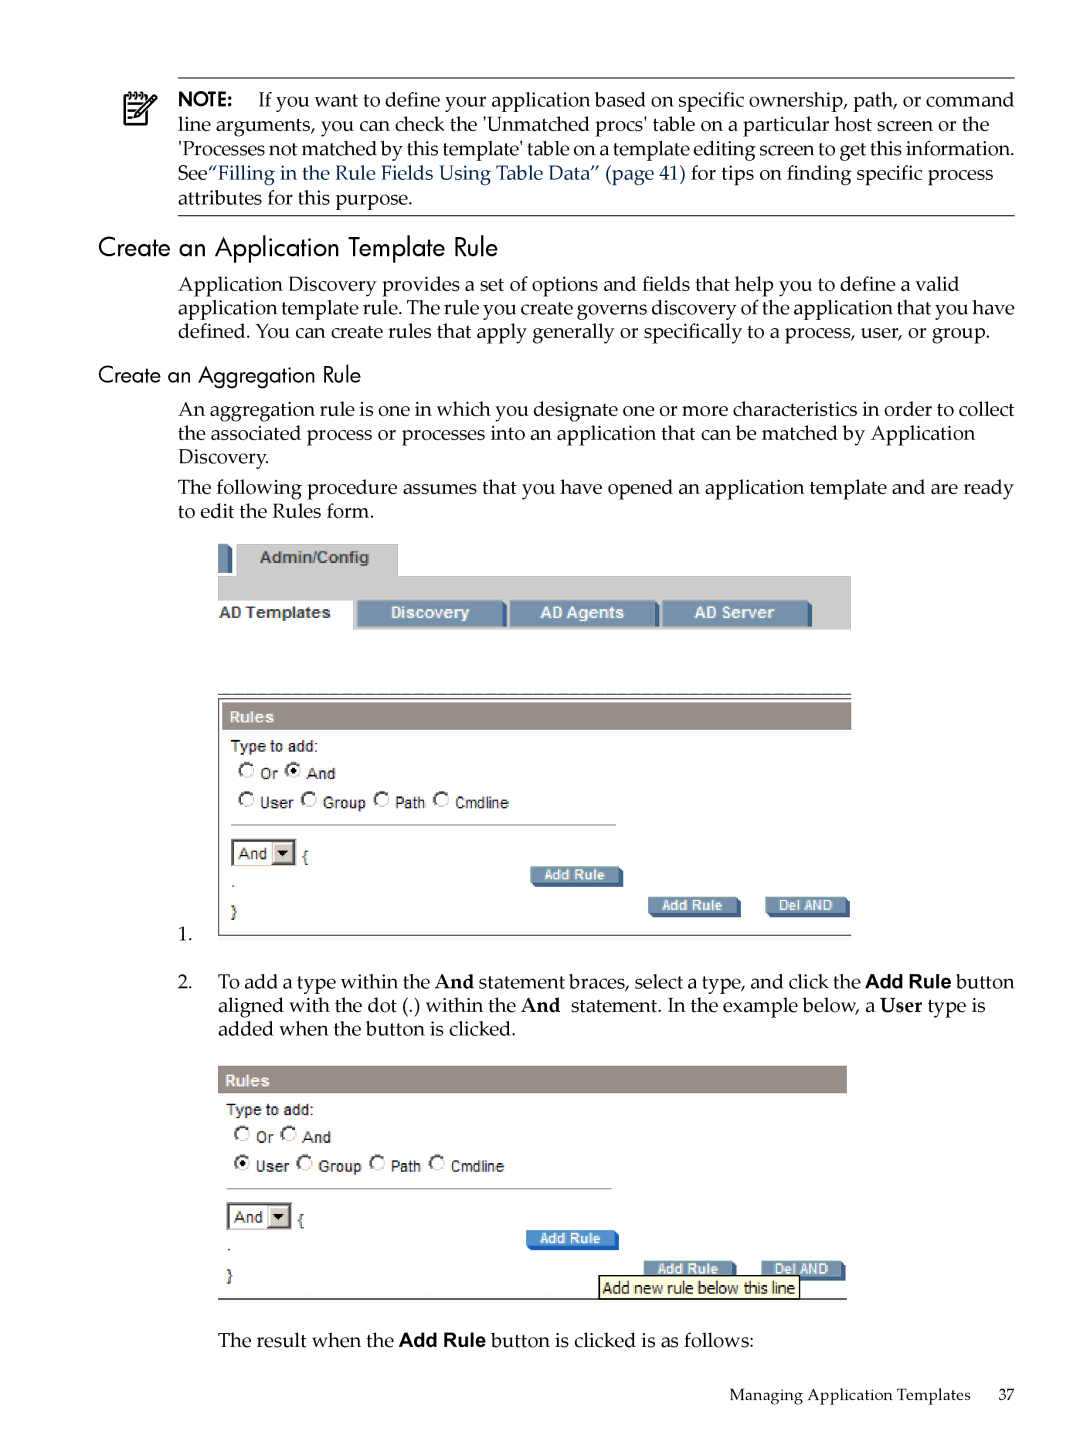 HP 5992-3838 manual Create an Application Template Rule, Create an Aggregation Rule 